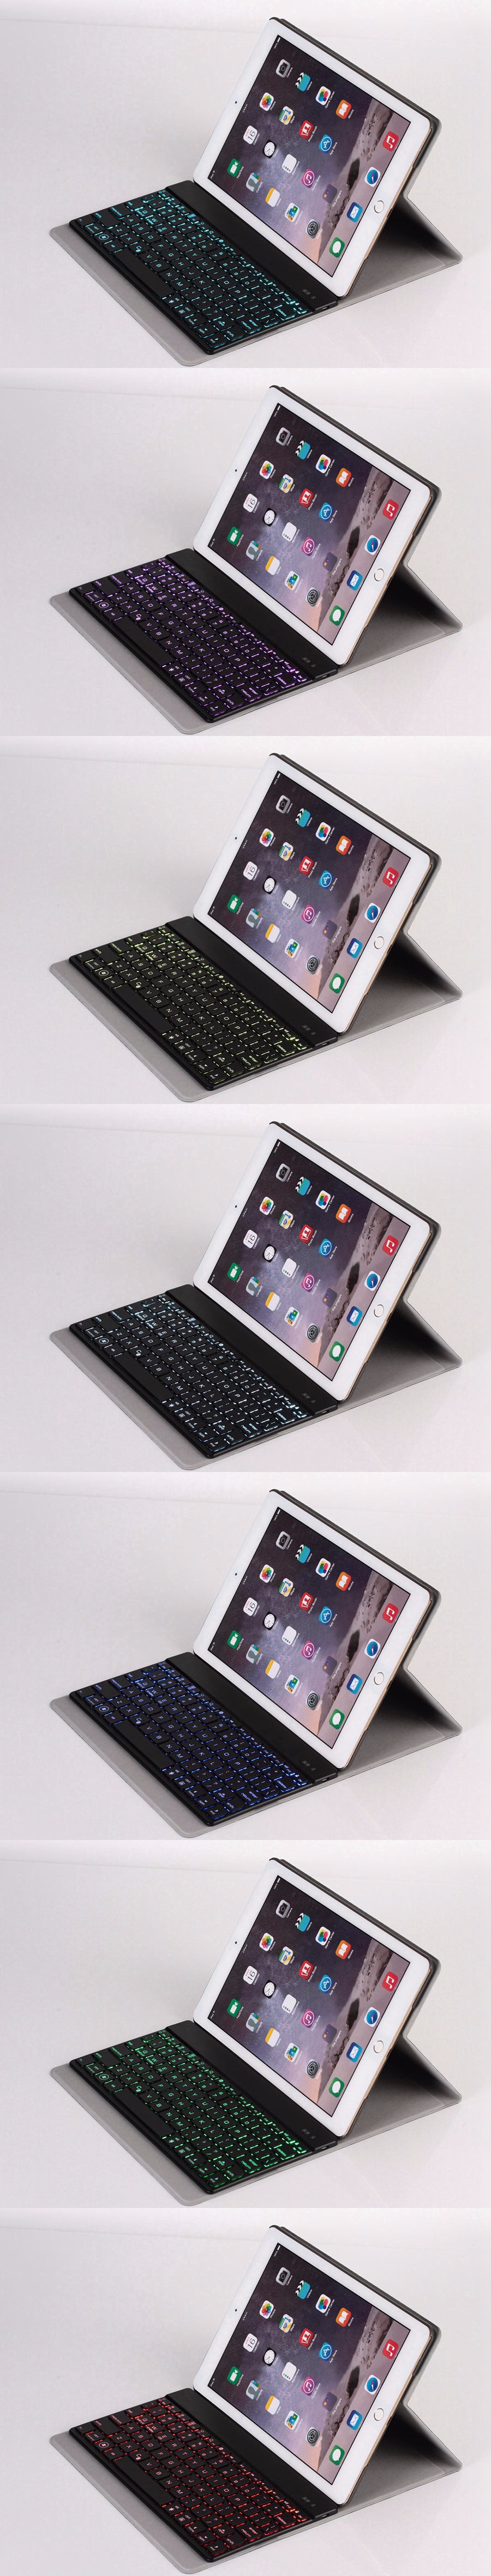 iPad-Air-2-keyboard-case-p